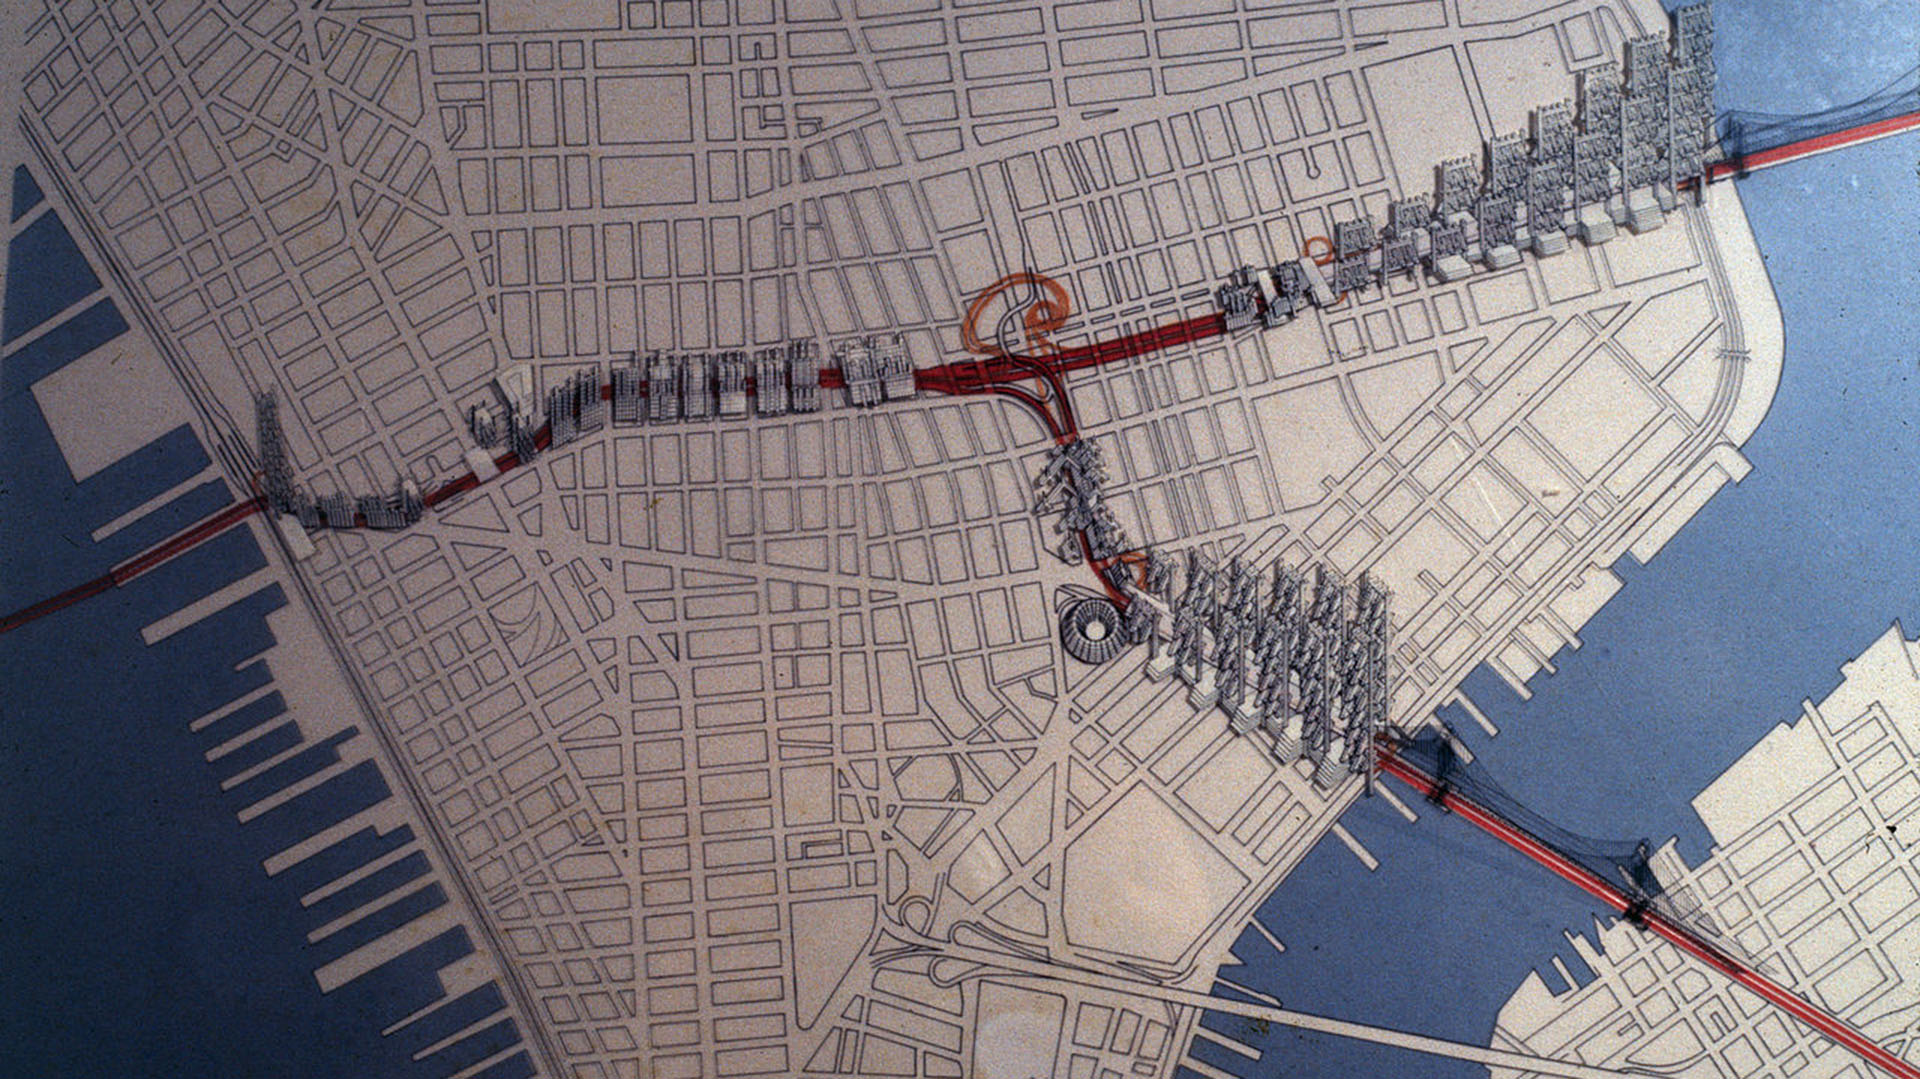 Mapa de la autopista que cruzaba el bajo Manhattan Lower Manhattan Expressway segn las ideas de Moses Foto Library of Congress  Wikimedia Commons